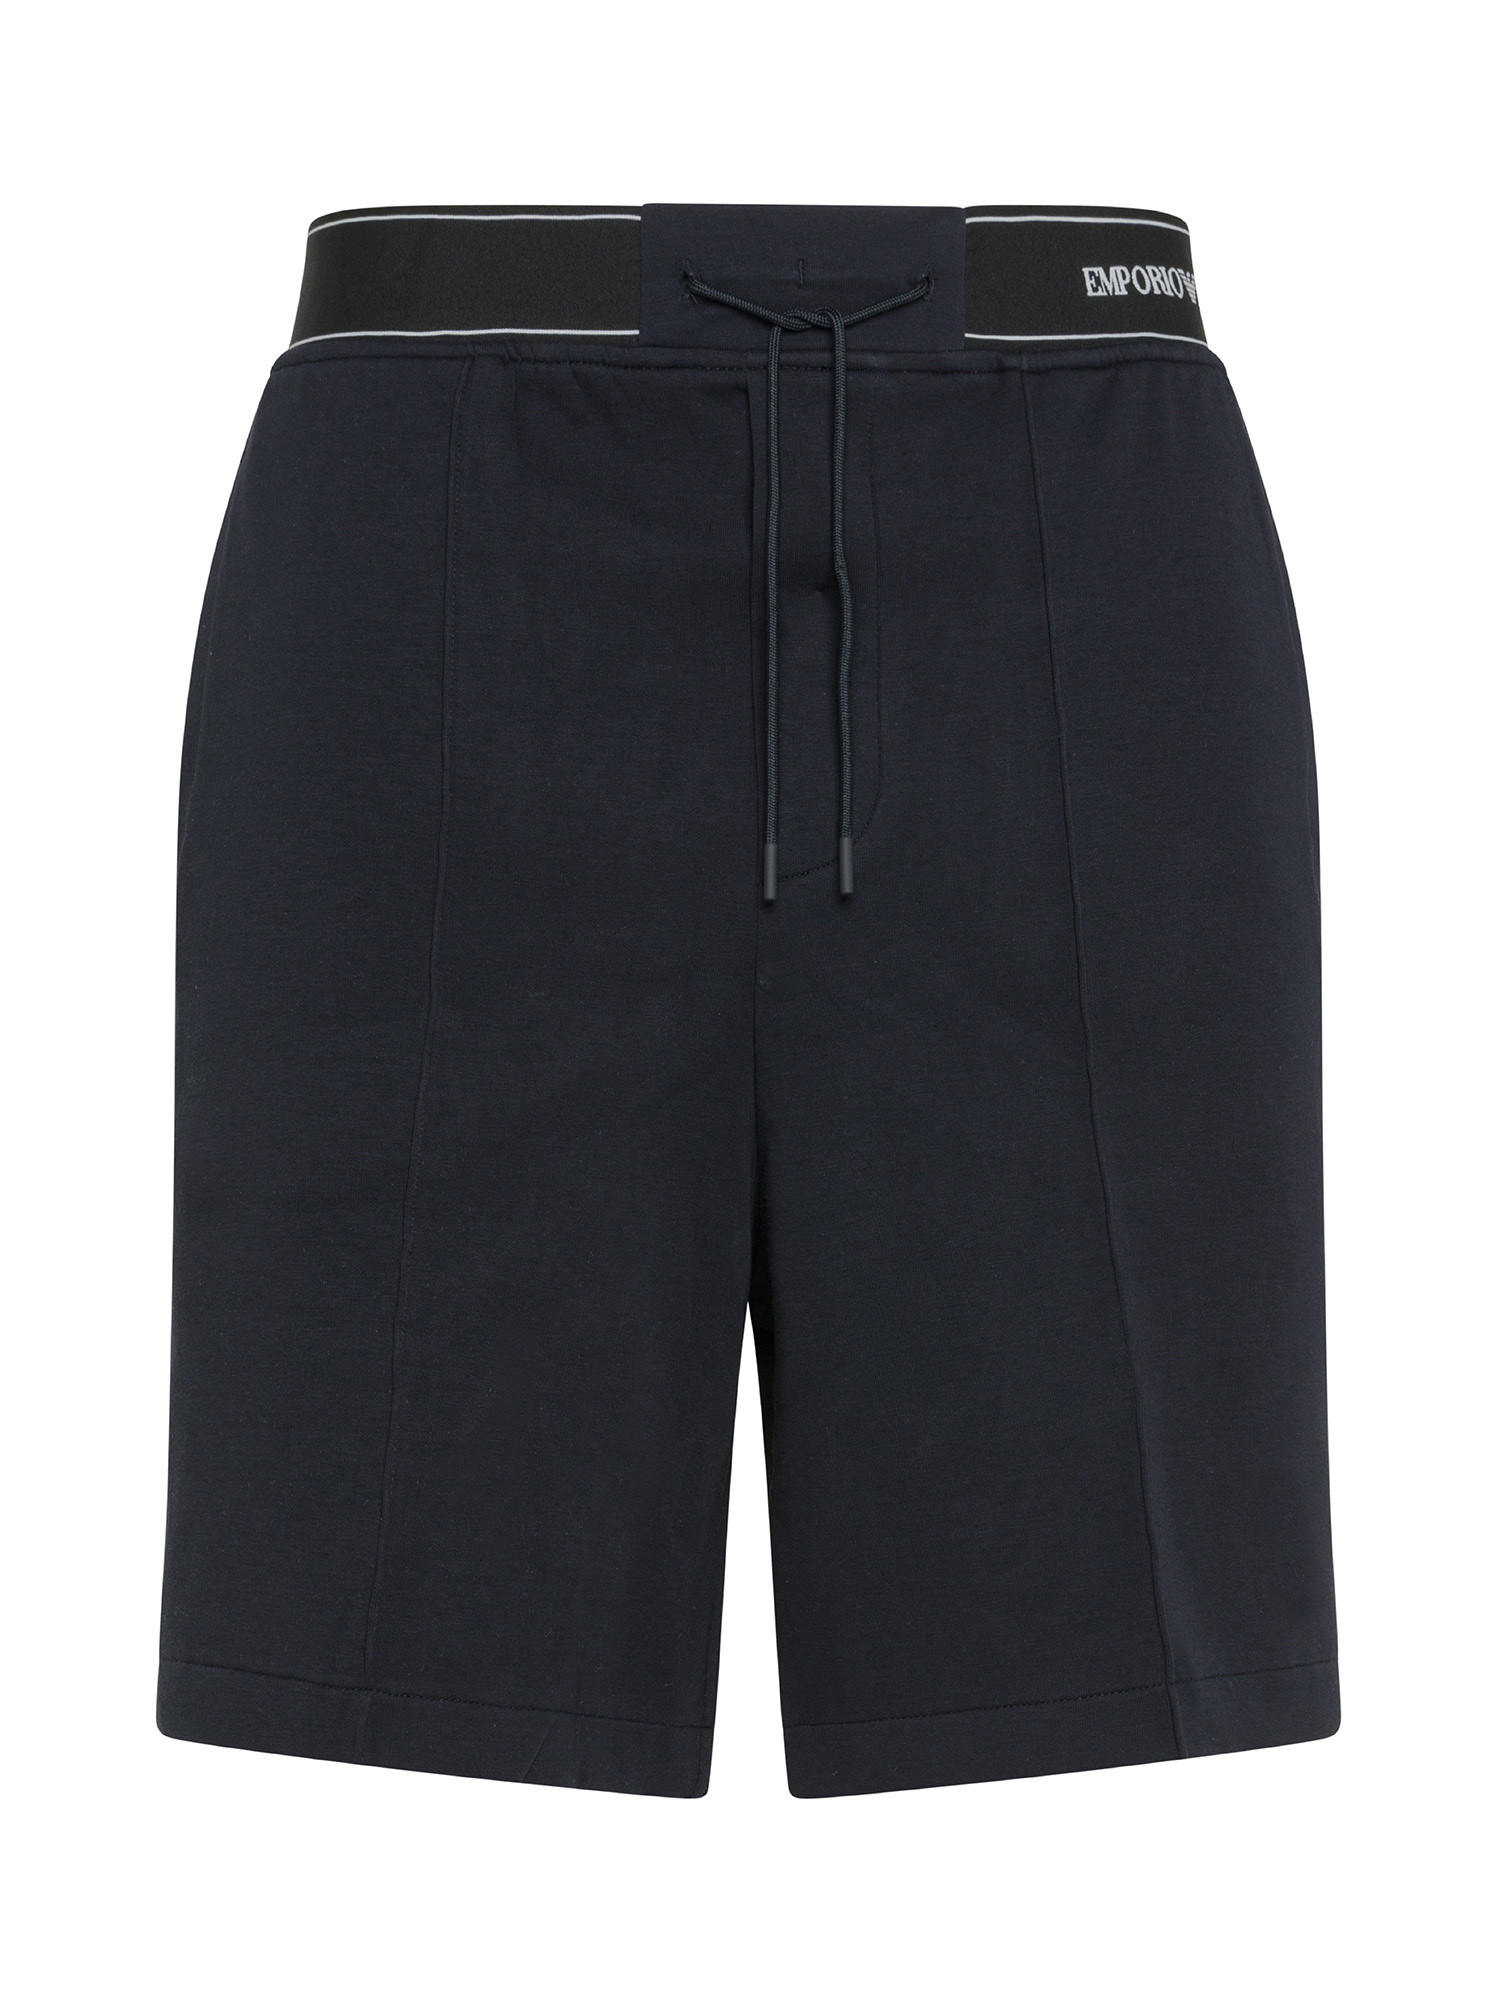 Emporio Armani - Bermuda shorts with logo, Dark Blue, large image number 0